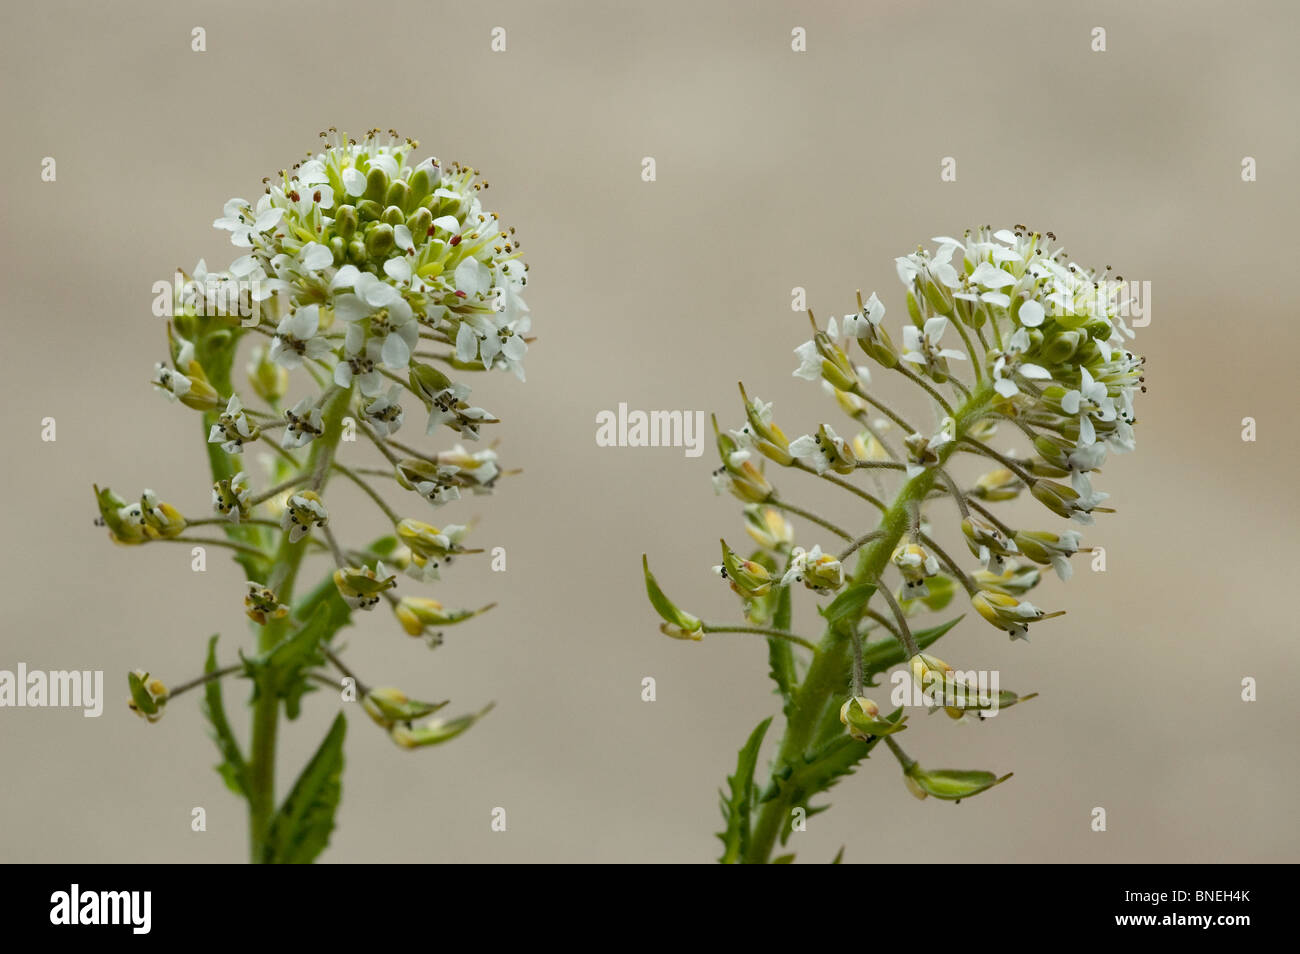 Pepperwort or field pepperweed (Lepidium heterophyllum) Stock Photo